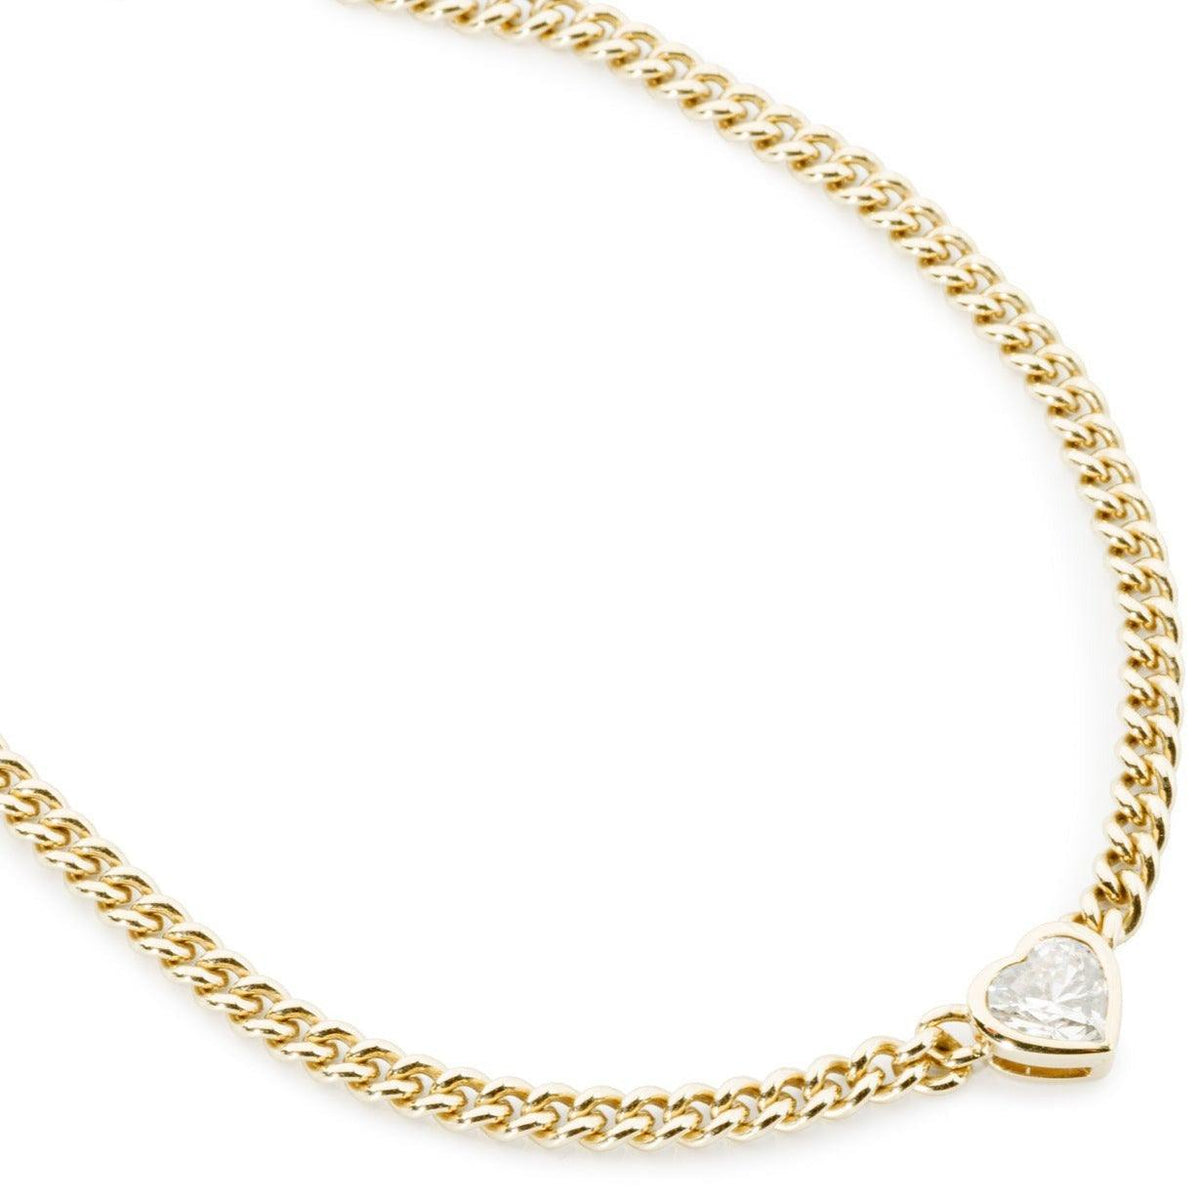 Heavenly Necklaces - A LA FOLIE Necklace in Gold - OutDazl